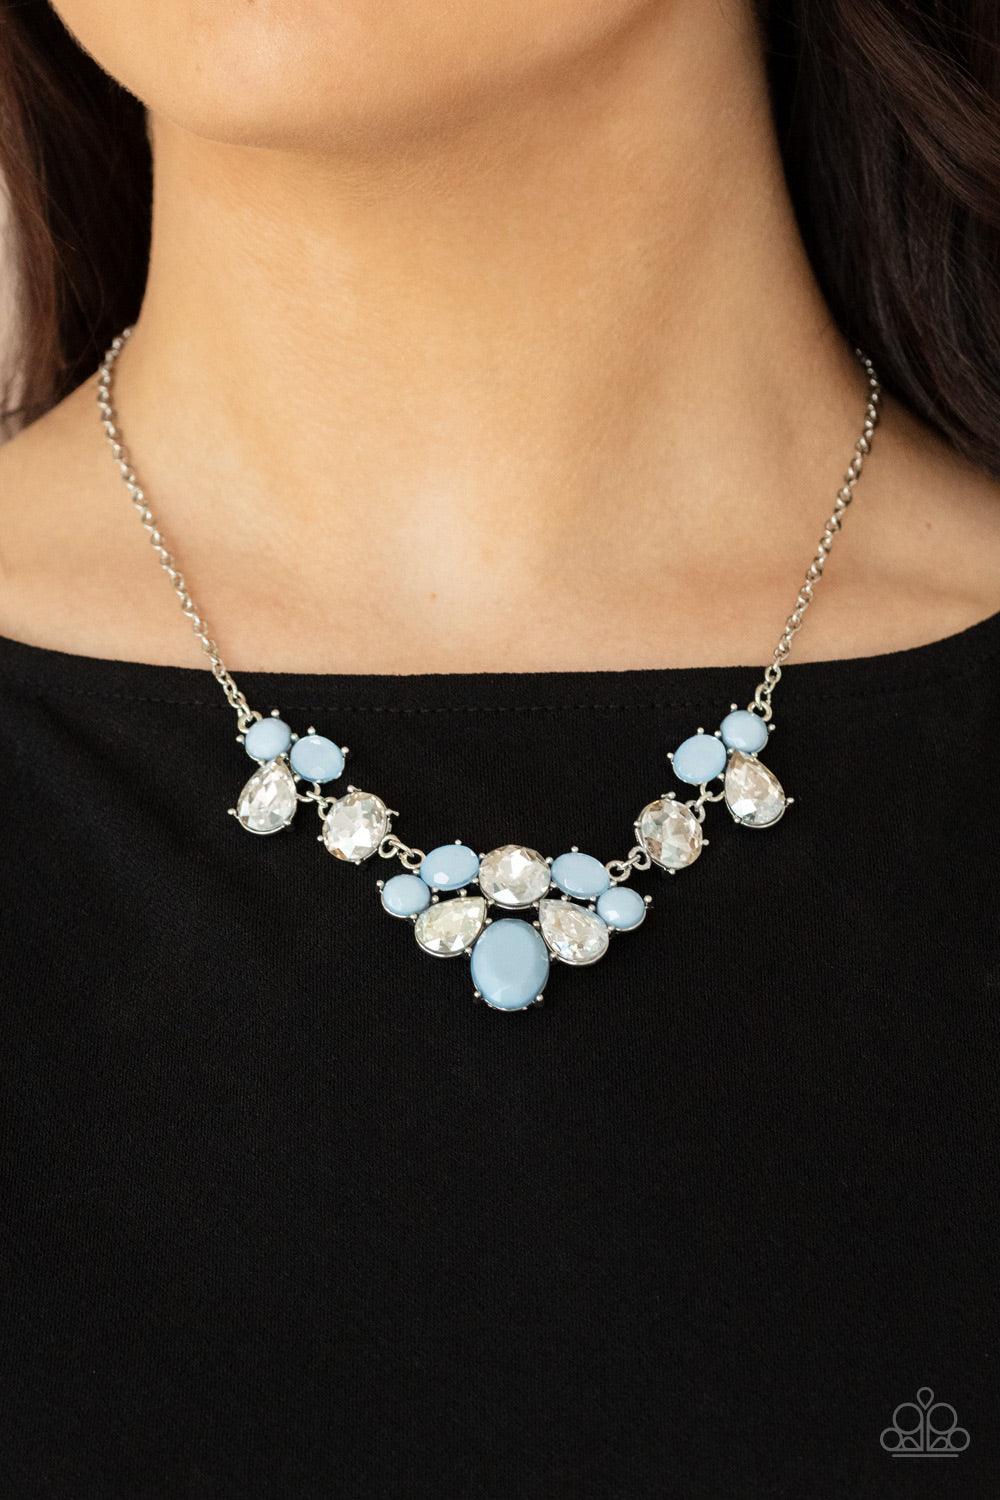 Ethereal Romance Blue Necklace - Jewelry by Bretta - Jewelry by Bretta